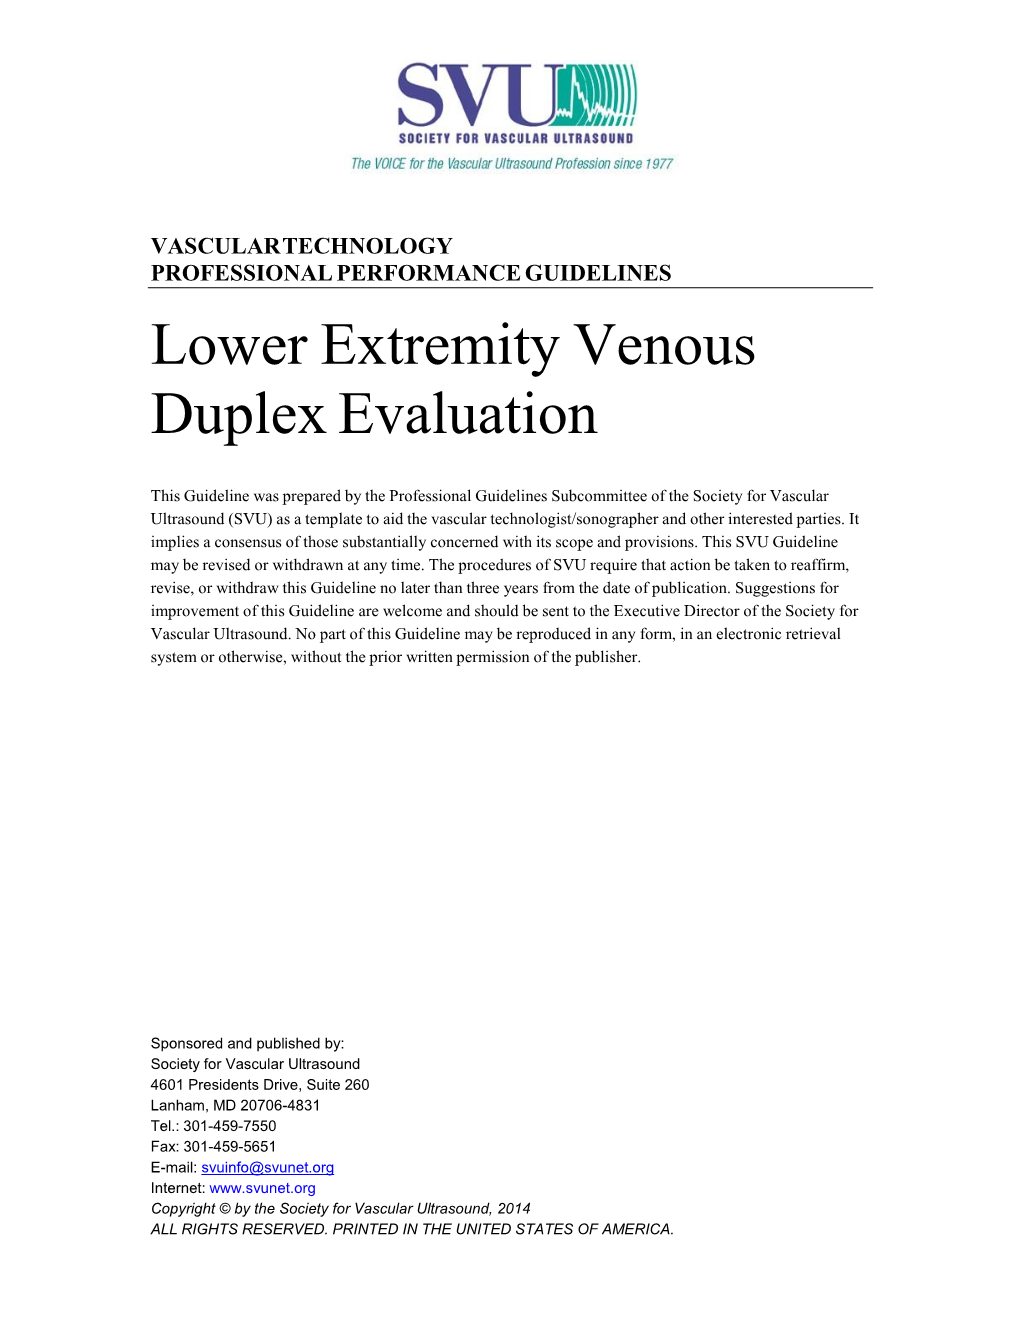 Lower Extremity Venous Duplex Evaluation